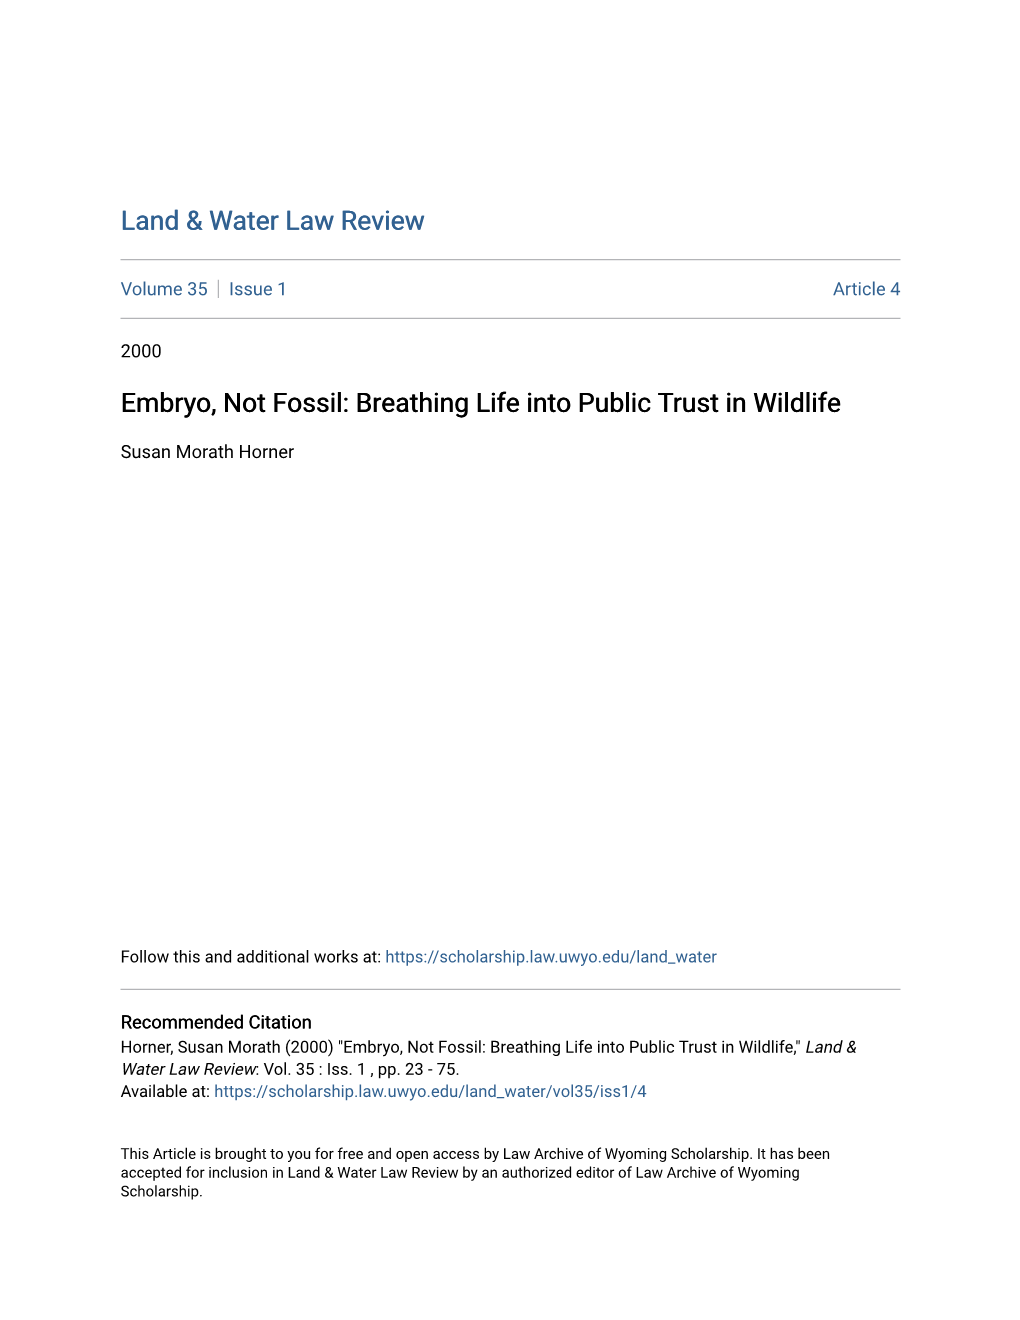 Breathing Life Into Public Trust in Wildlife